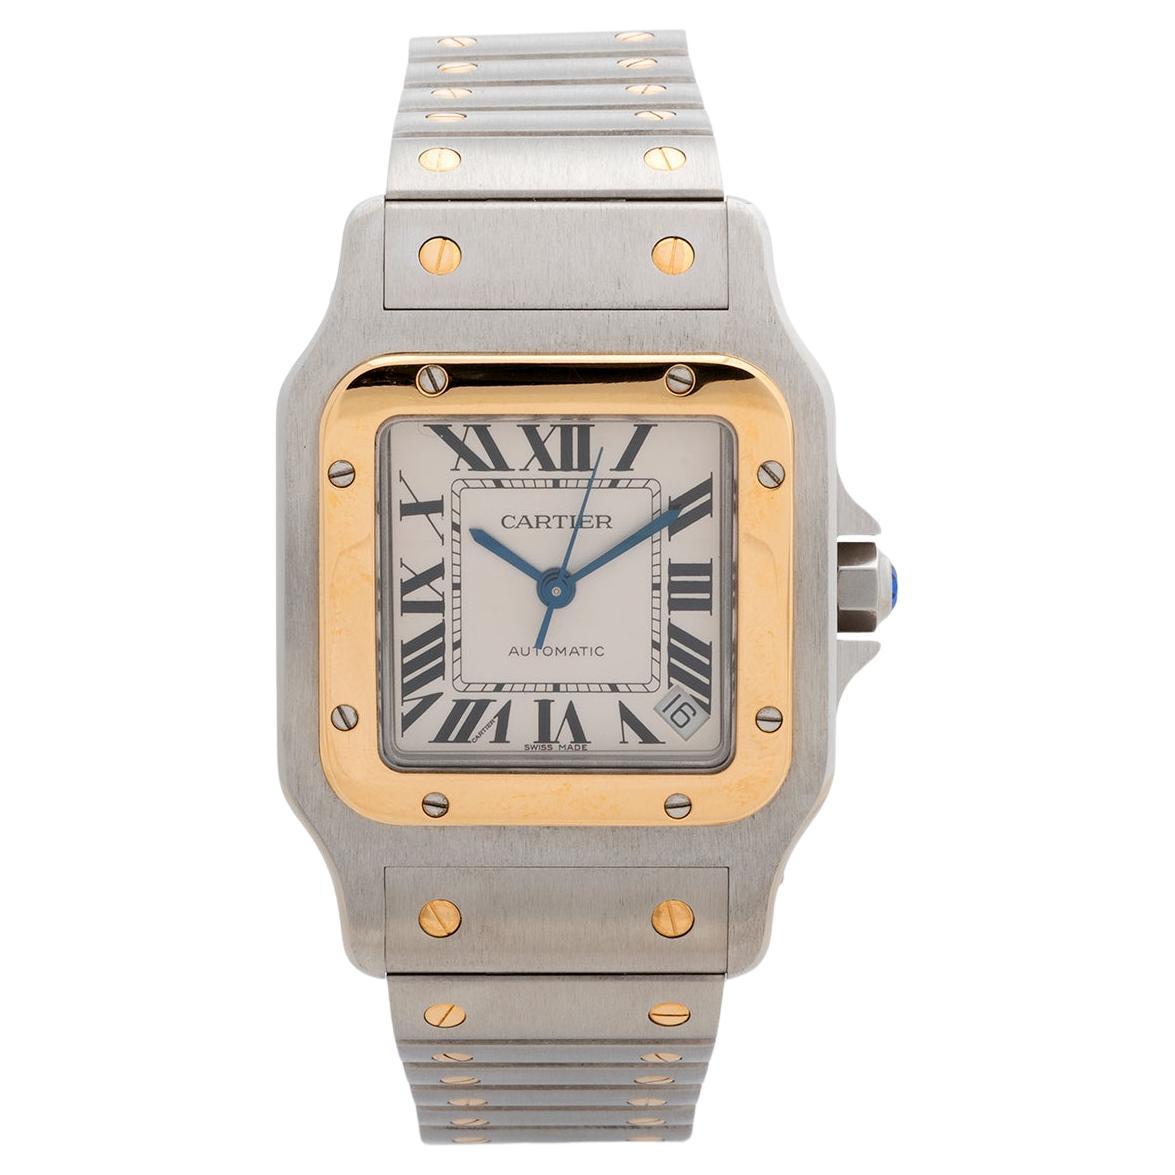 Cartier Santos Galbee XL Wristwatch Ref 2823. Automatic Movement, Year c.2010.